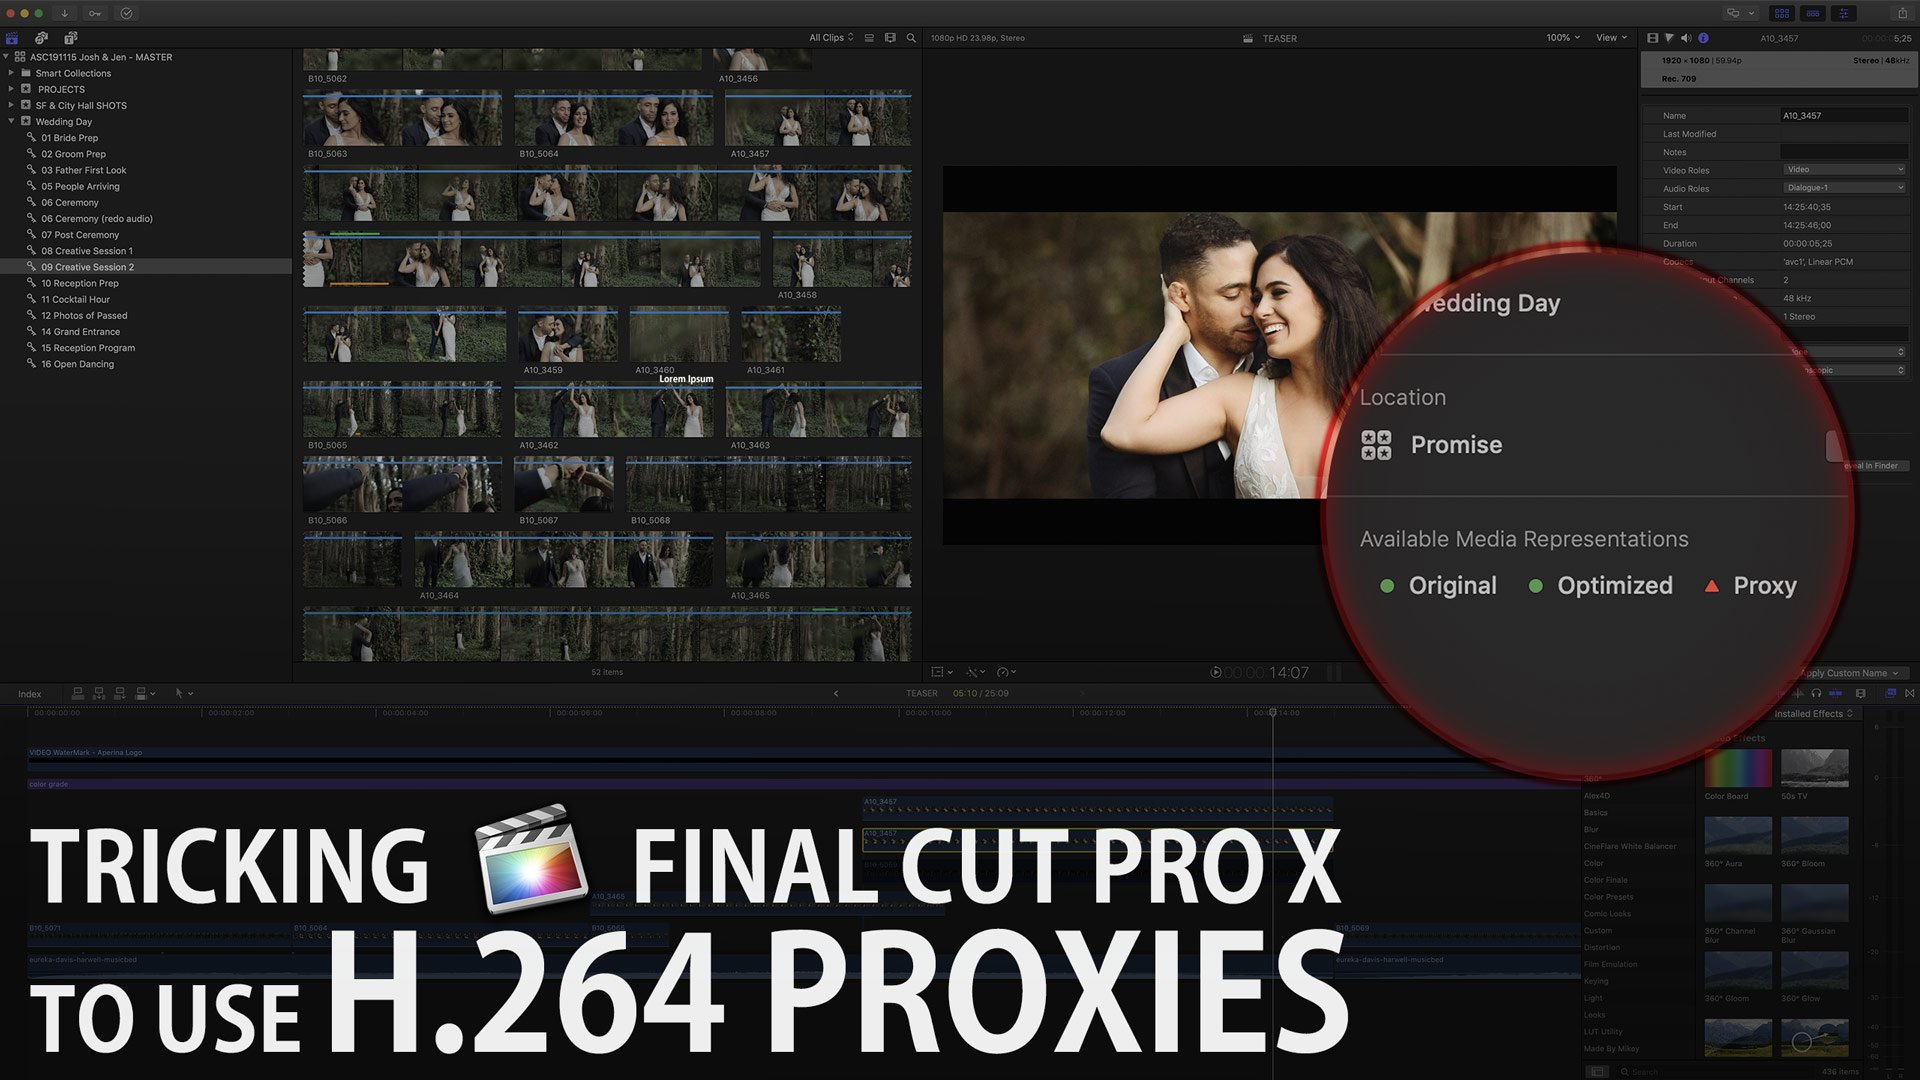 select between cameras in final cut pro x 10.3.4